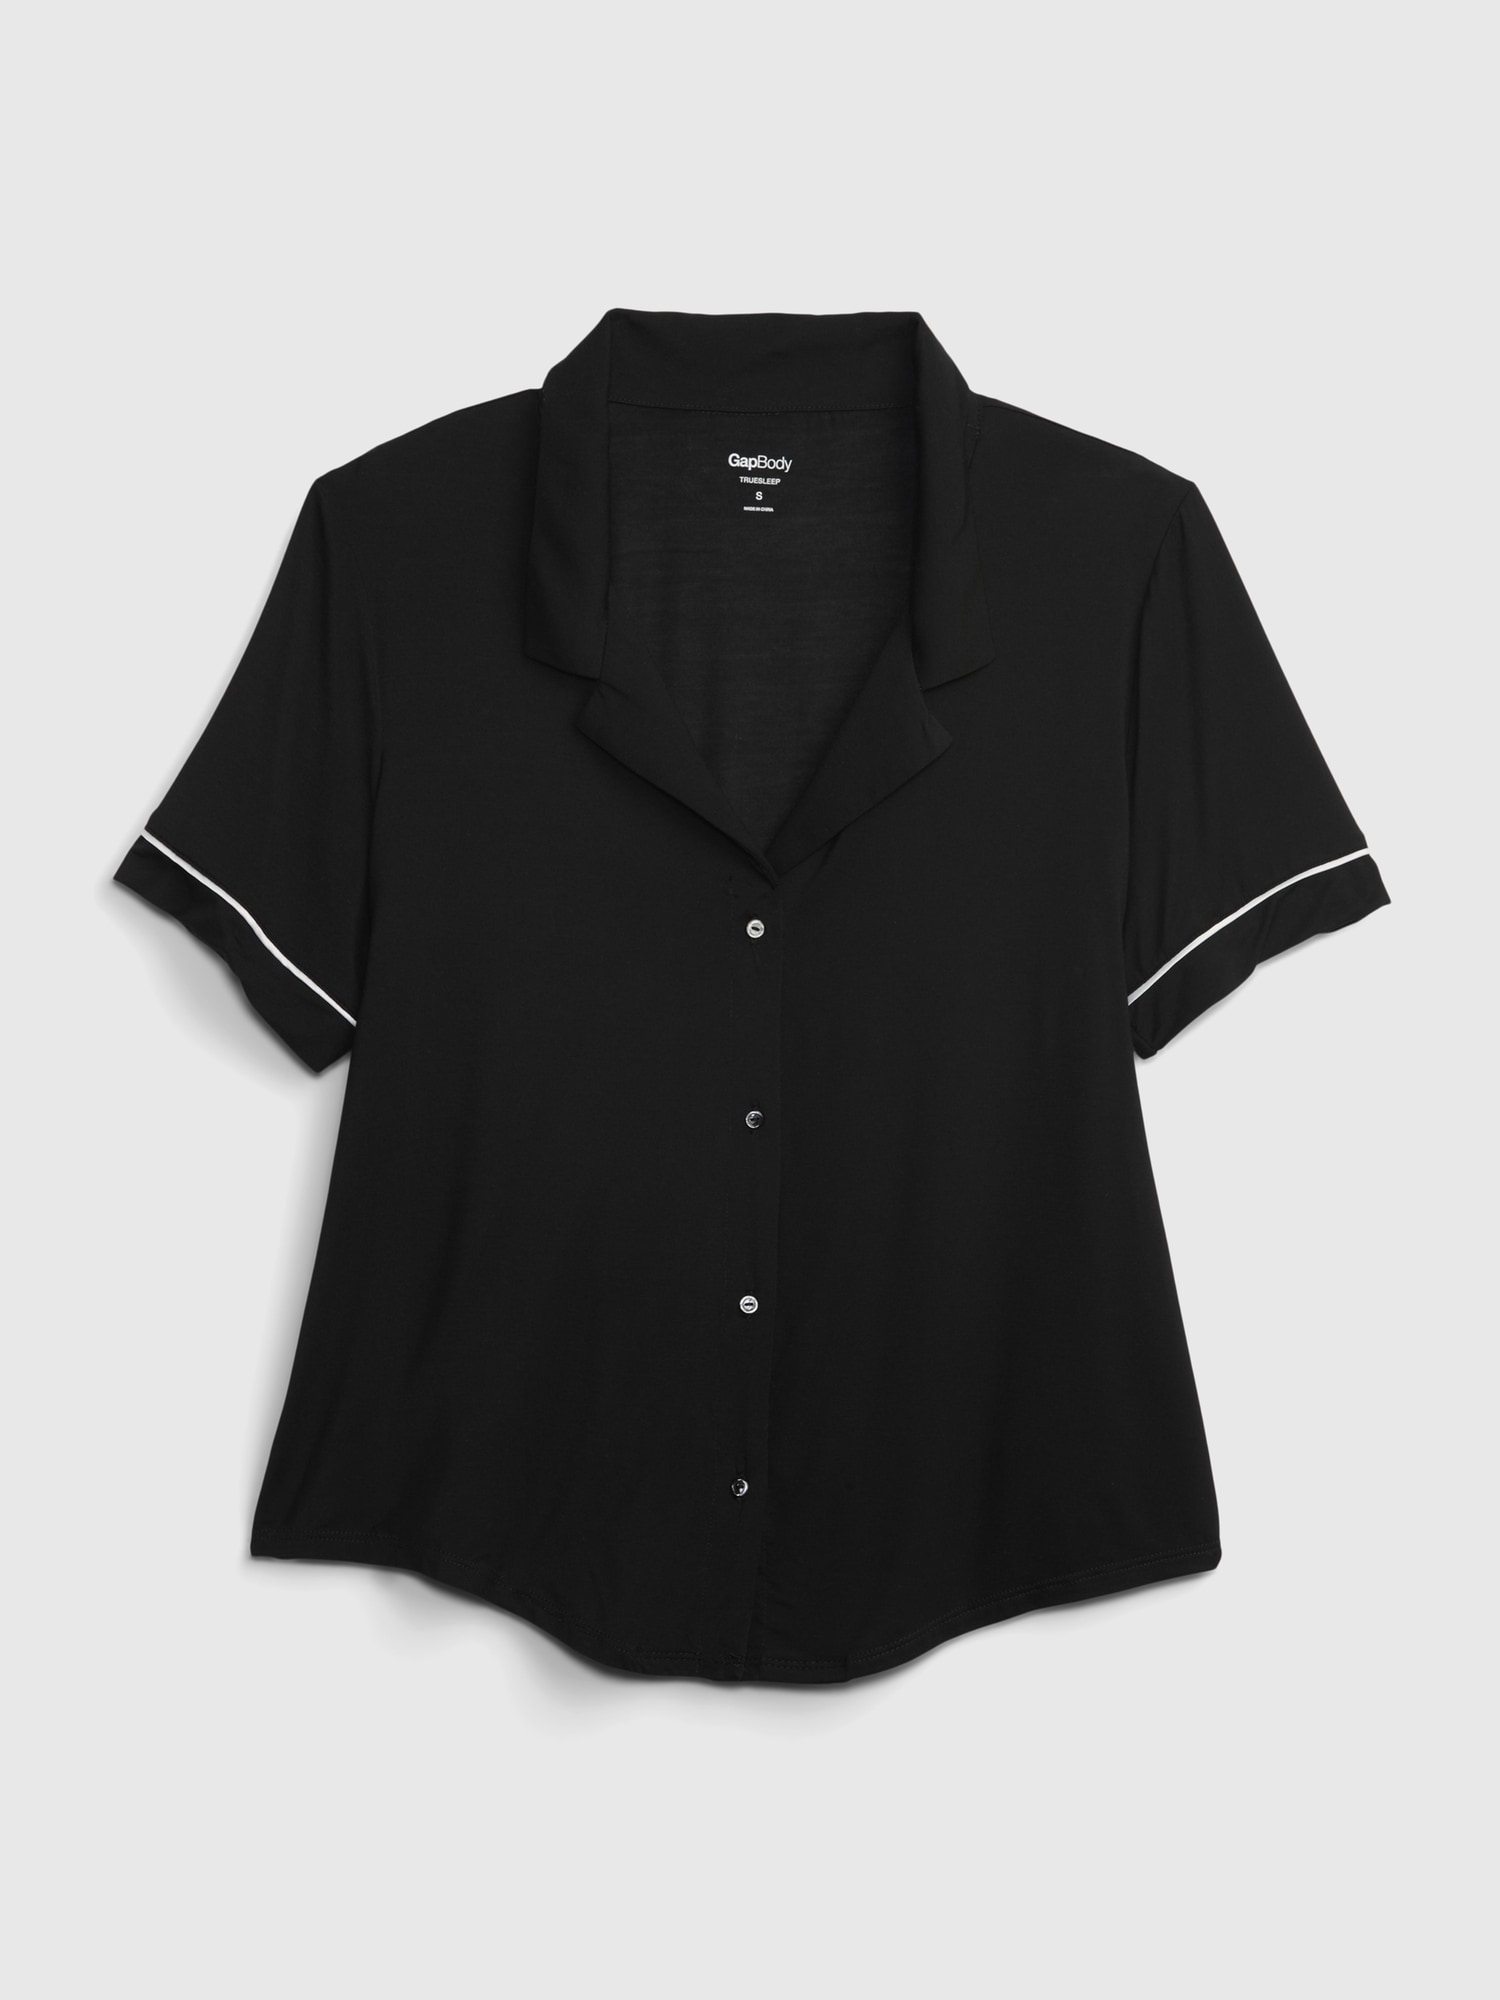 Buy Gap Modal Truesleep Pyjama Top from the Gap online shop